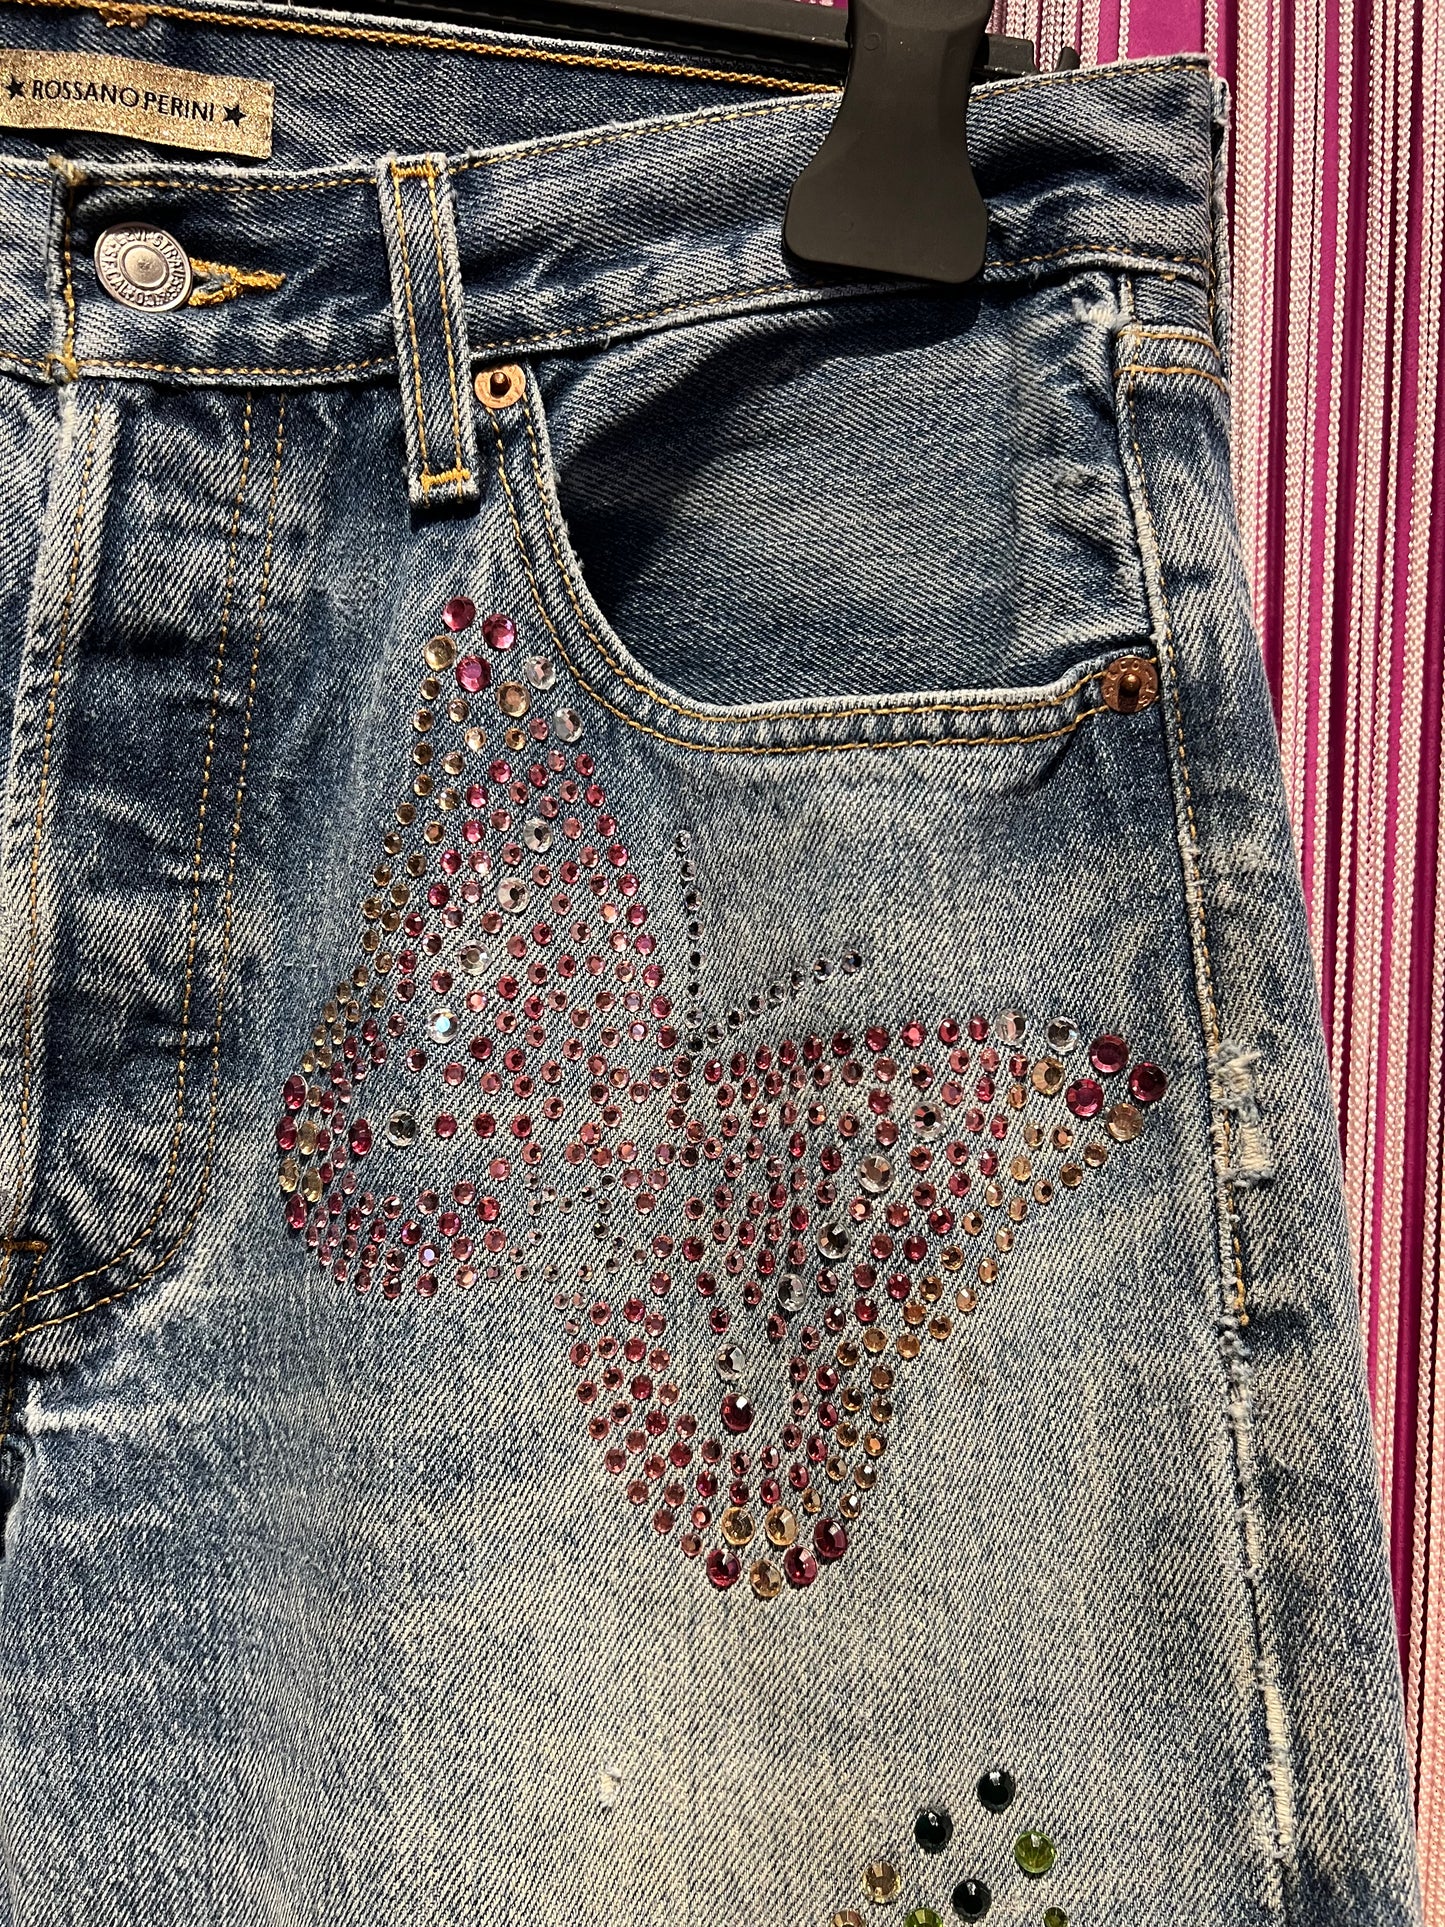 Rossano Perini jeans vintage farfalle strass multicolor  mod ultraboy